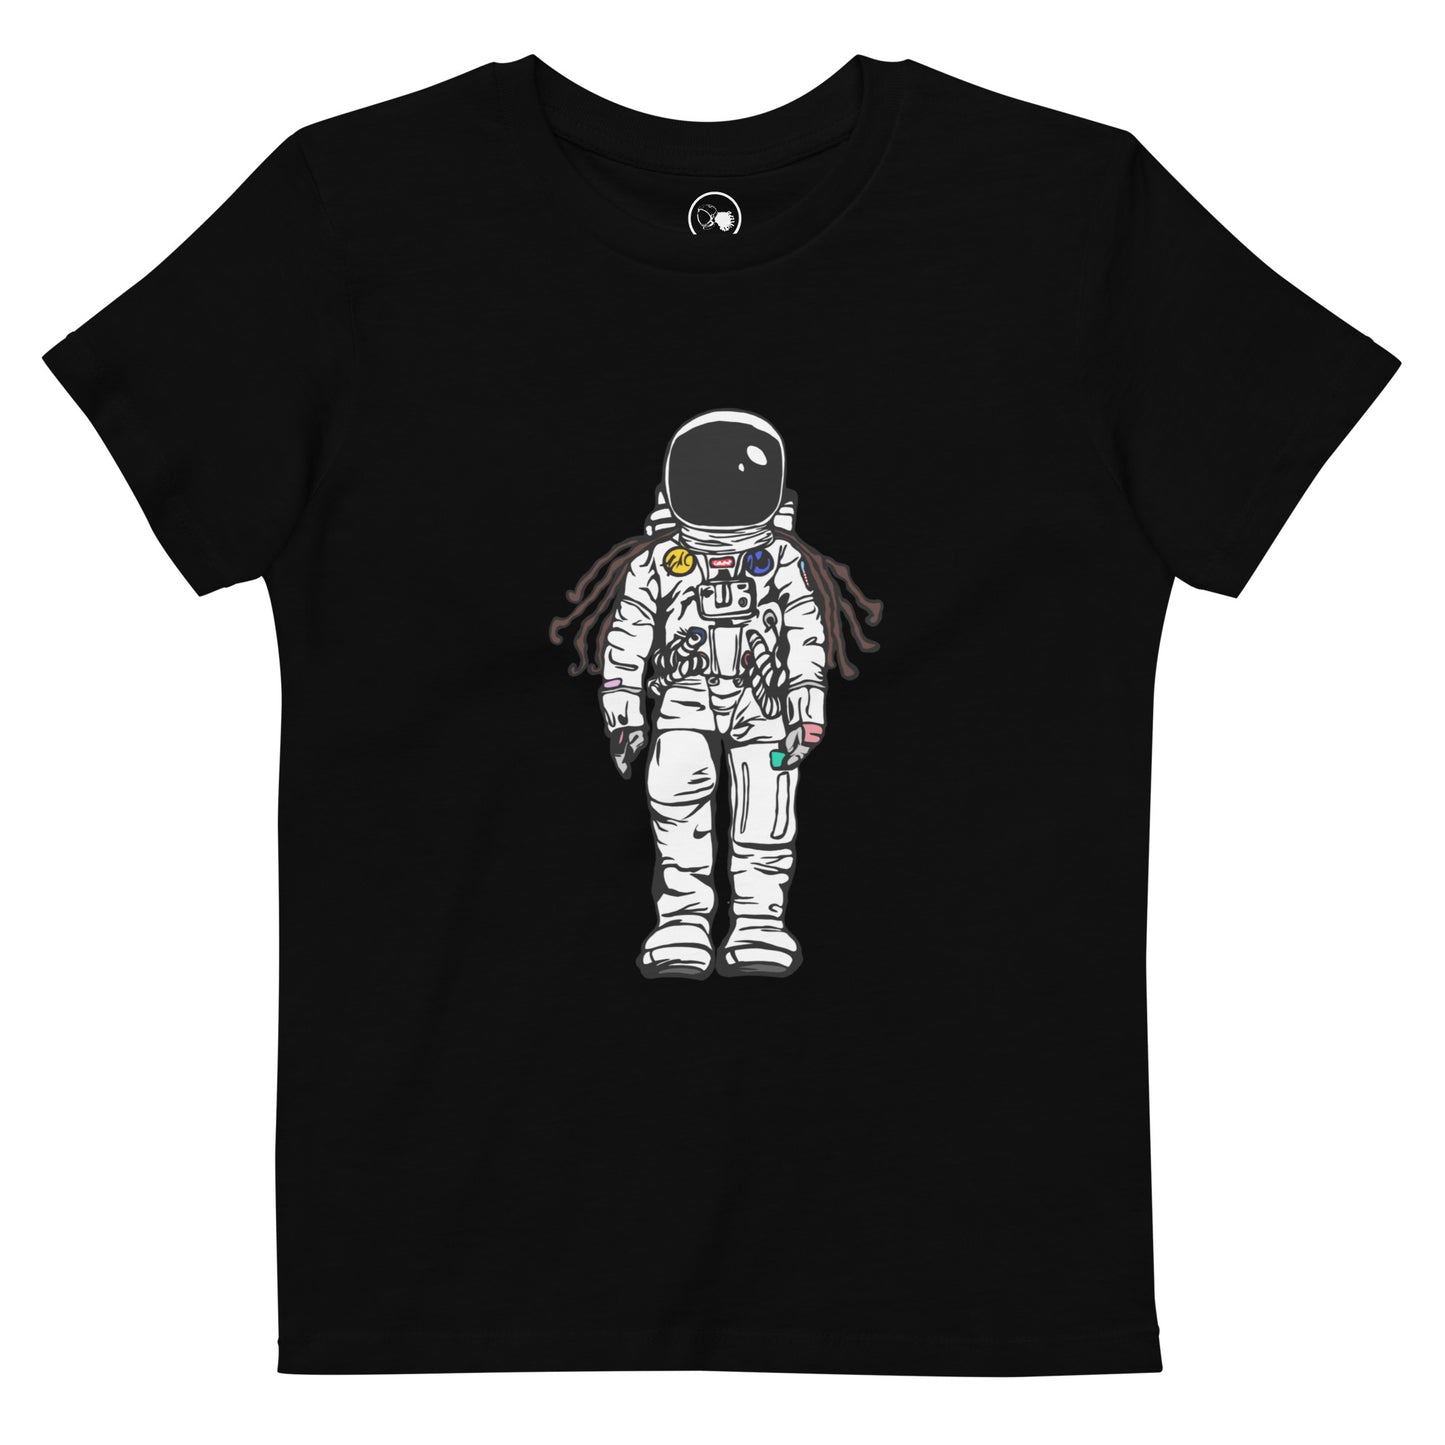 The "New" EVA Suit Kids T-Shirt